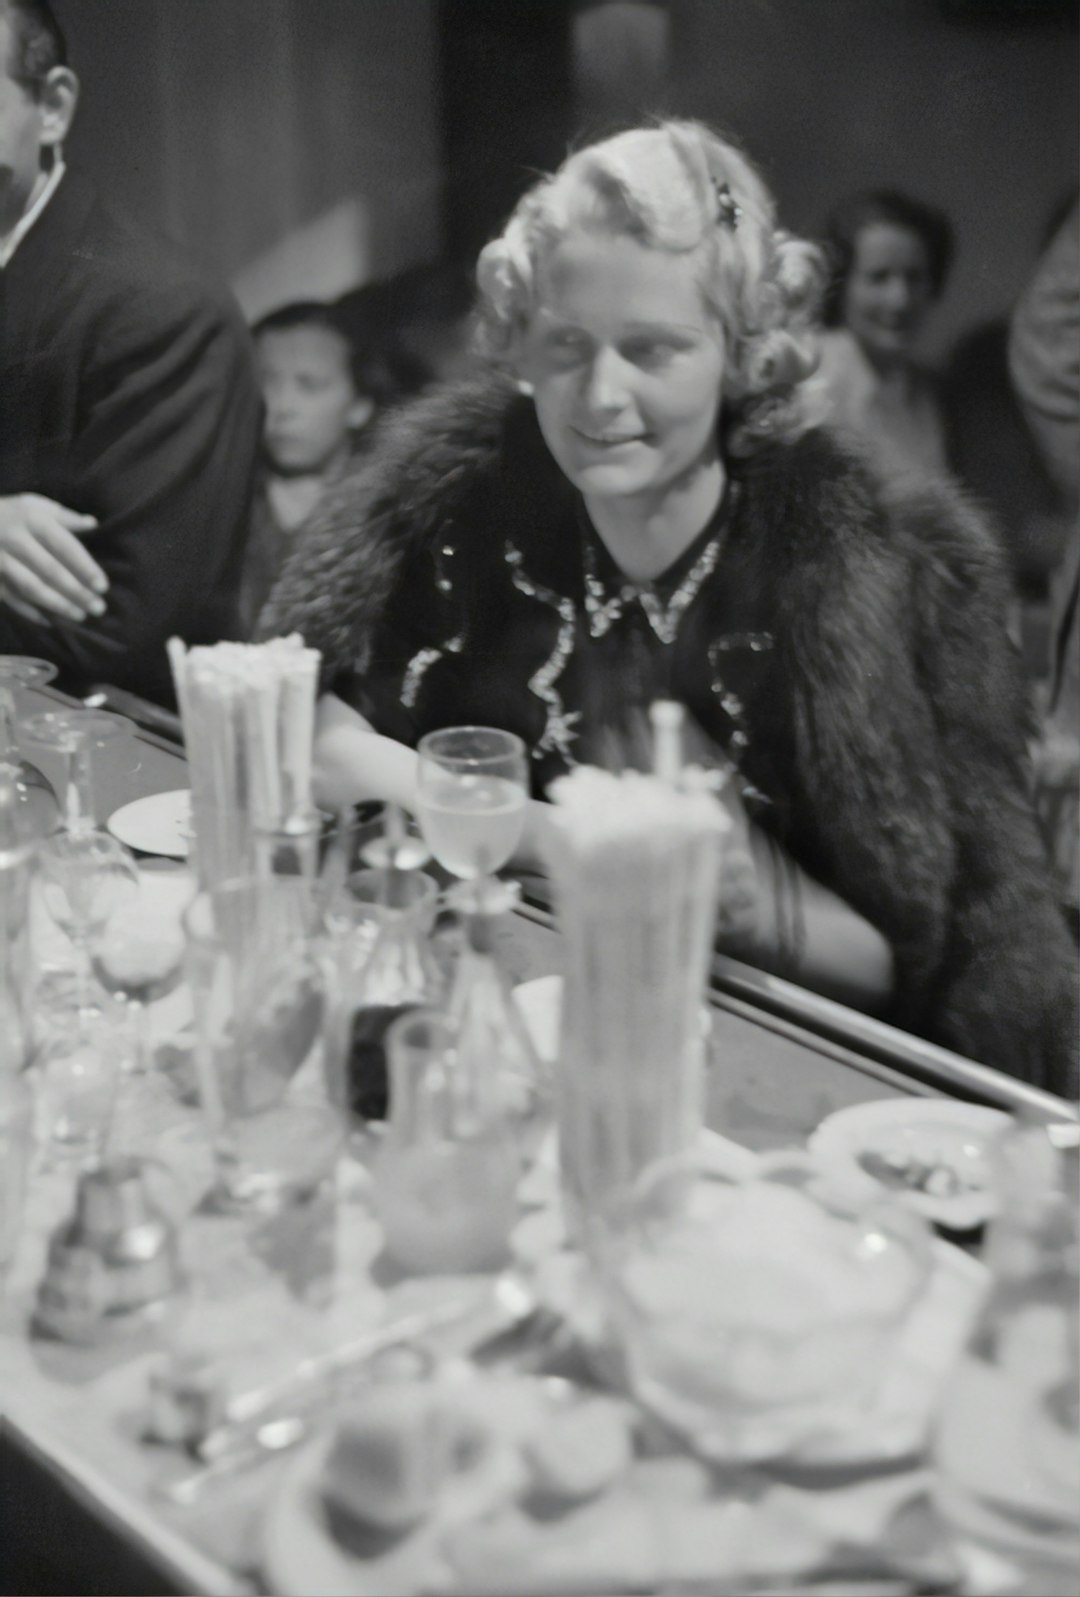 Apres ski at the bar, 1940